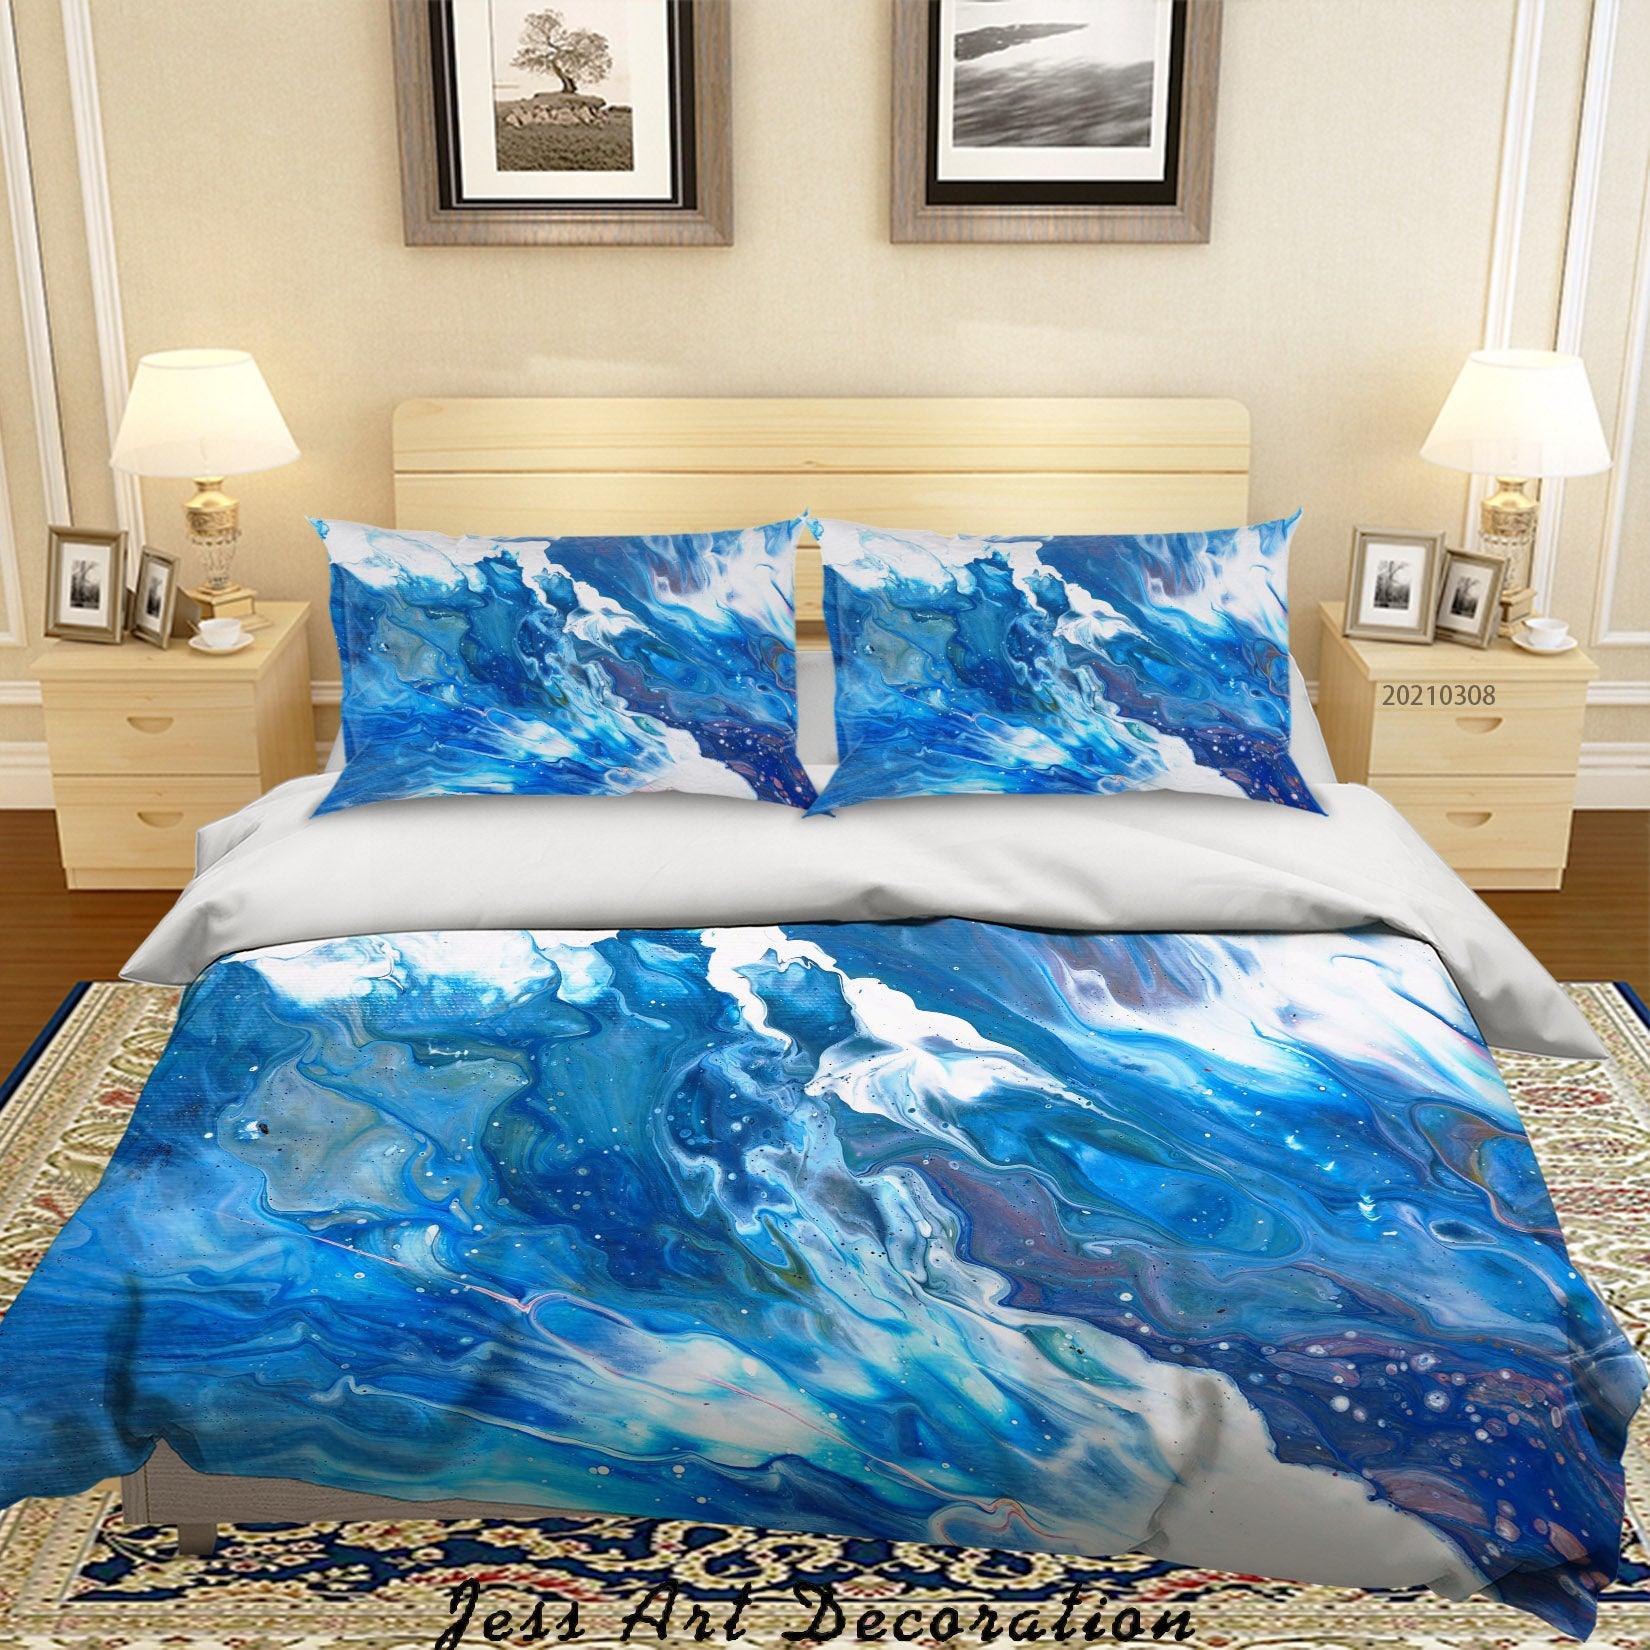 3D Abstract Blue Oil Painting Quilt Cover Set Bedding Set Duvet Cover Pillowcases 303- Jess Art Decoration